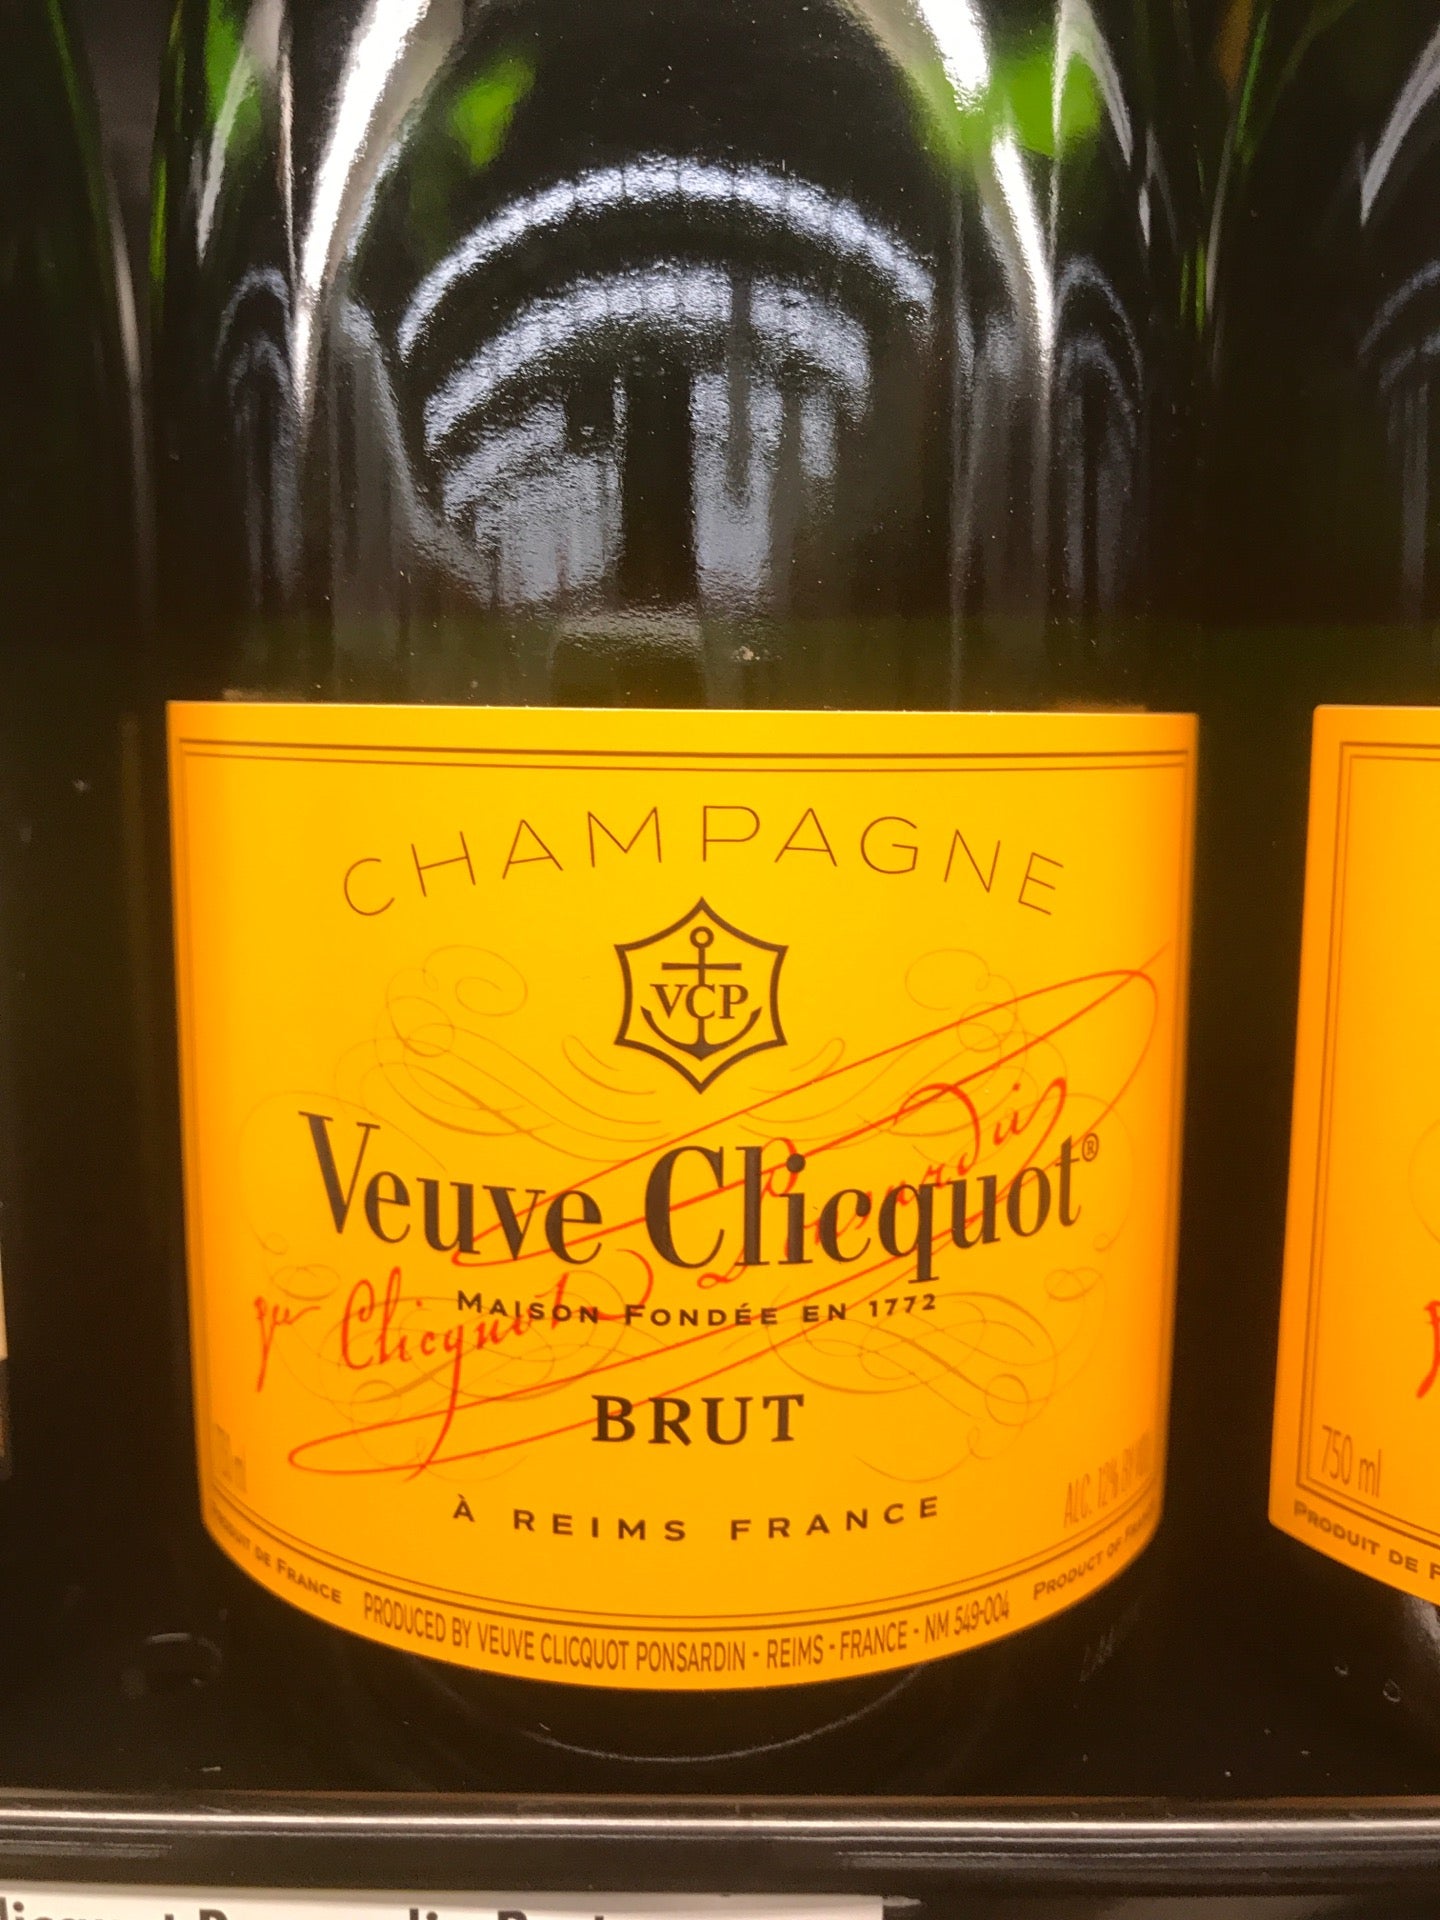 Veuve Clicquot Yellow Label Champagne, 750 mL - Ralphs